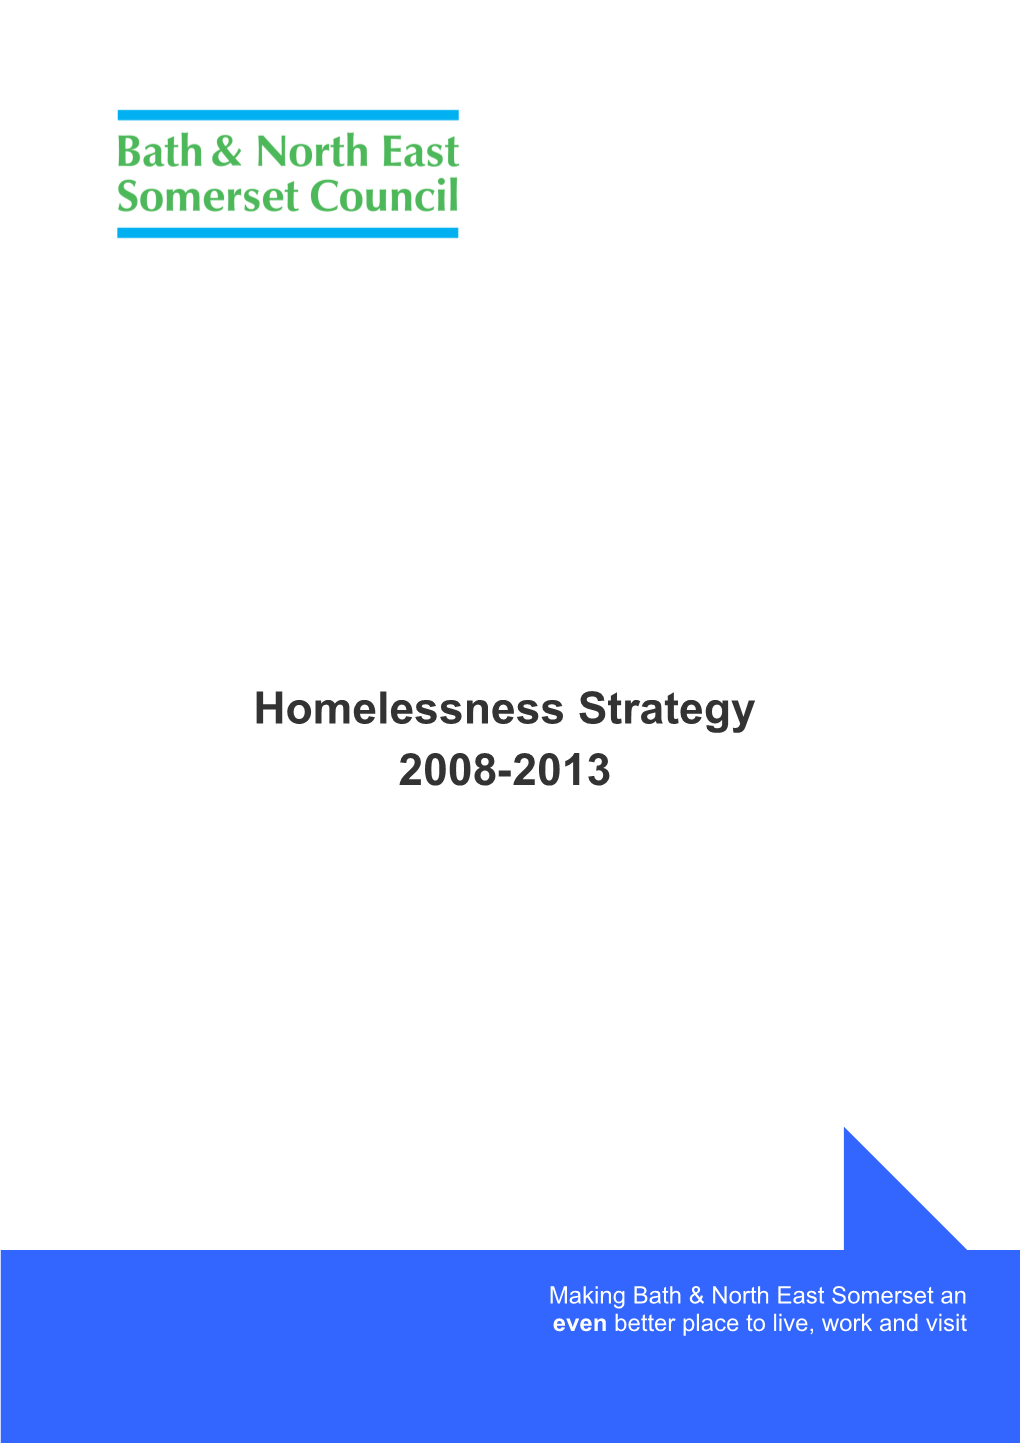 B&NES Homelessness Strategy 2008-2013